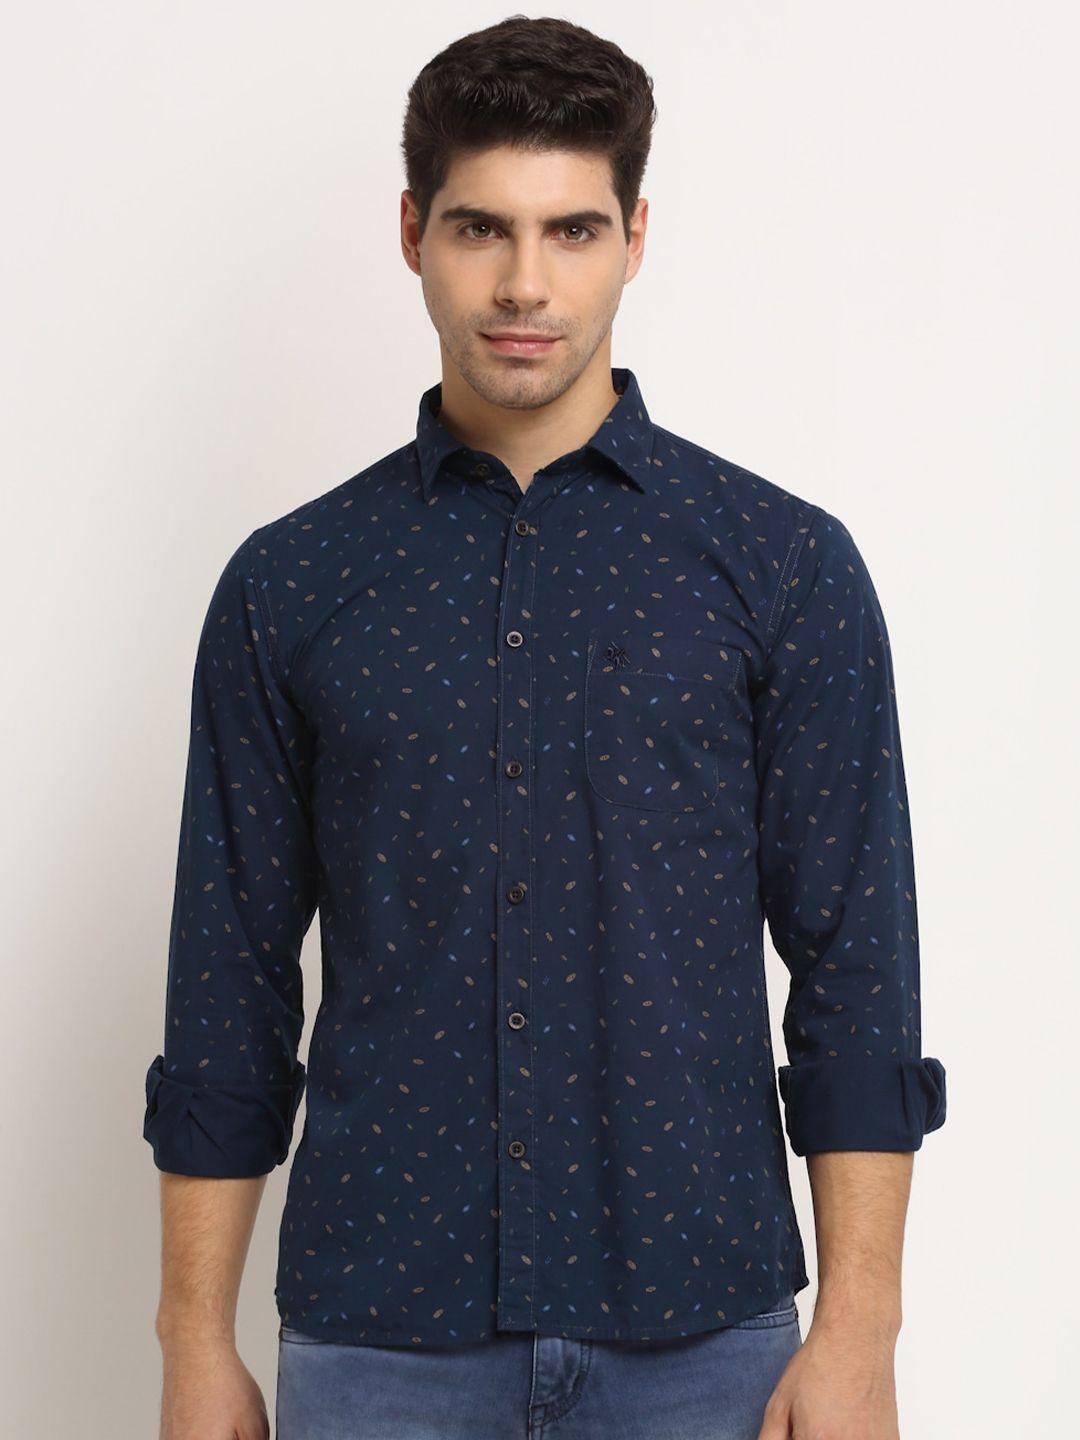 cantabil navy blue printed casual shirt